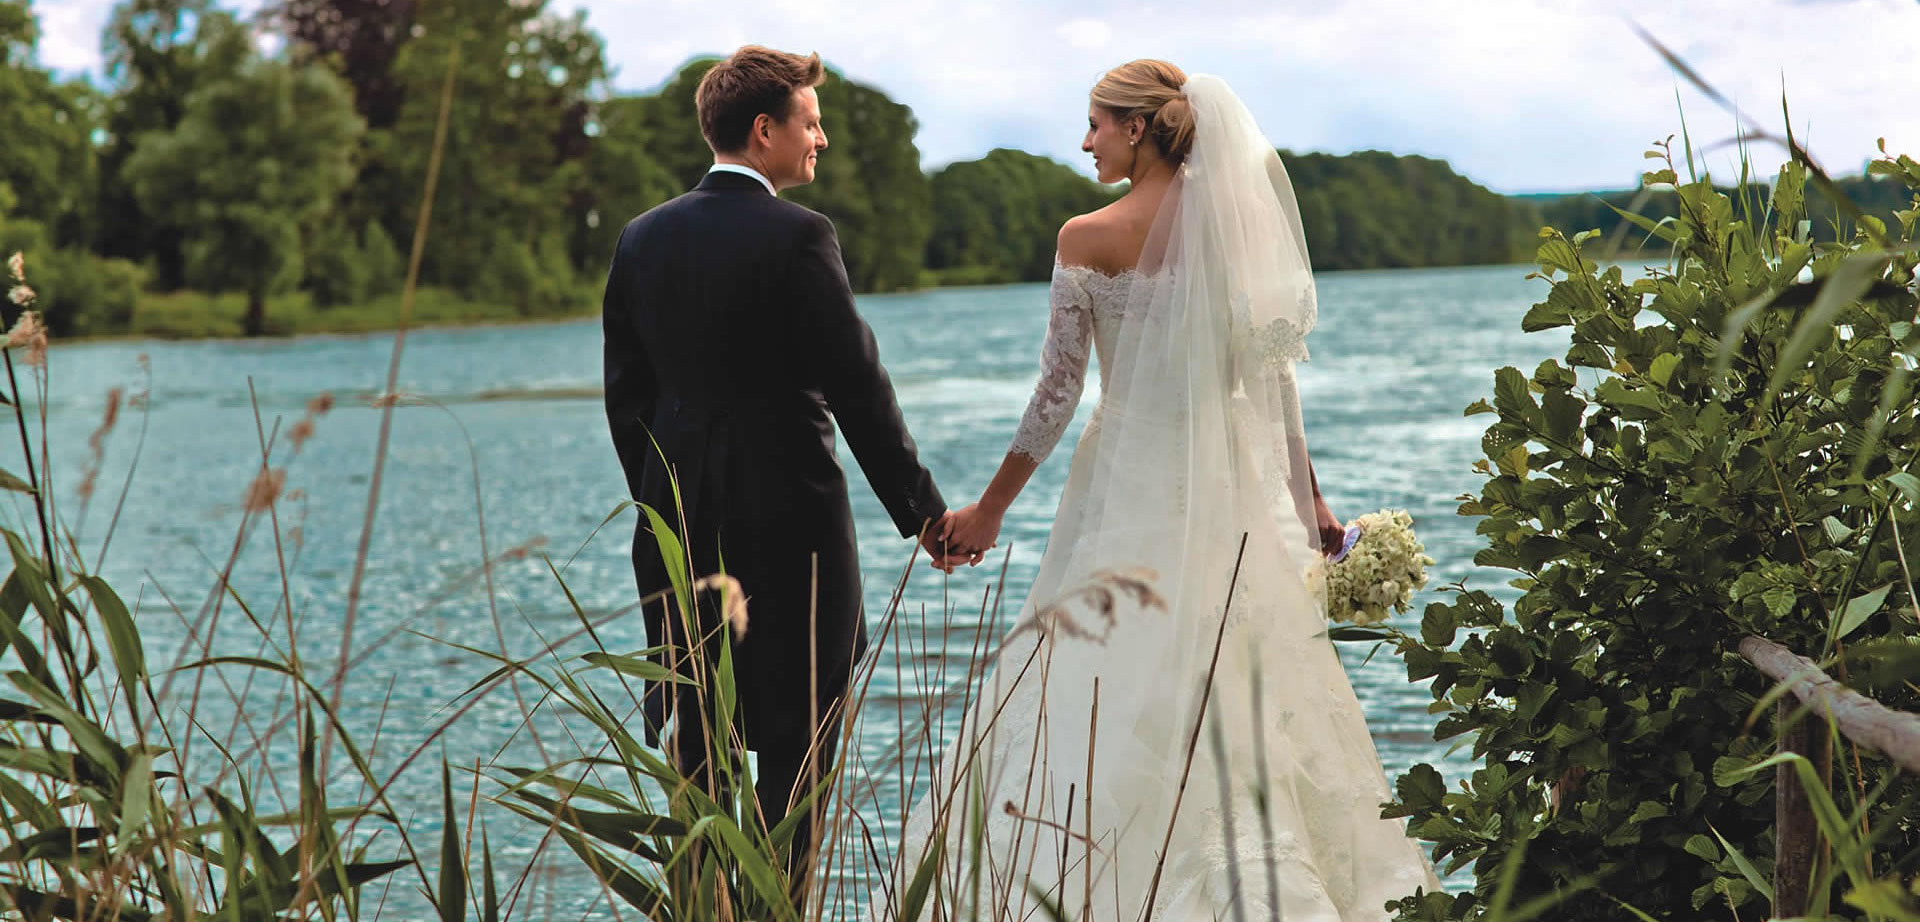 Romantic wedding at the lake